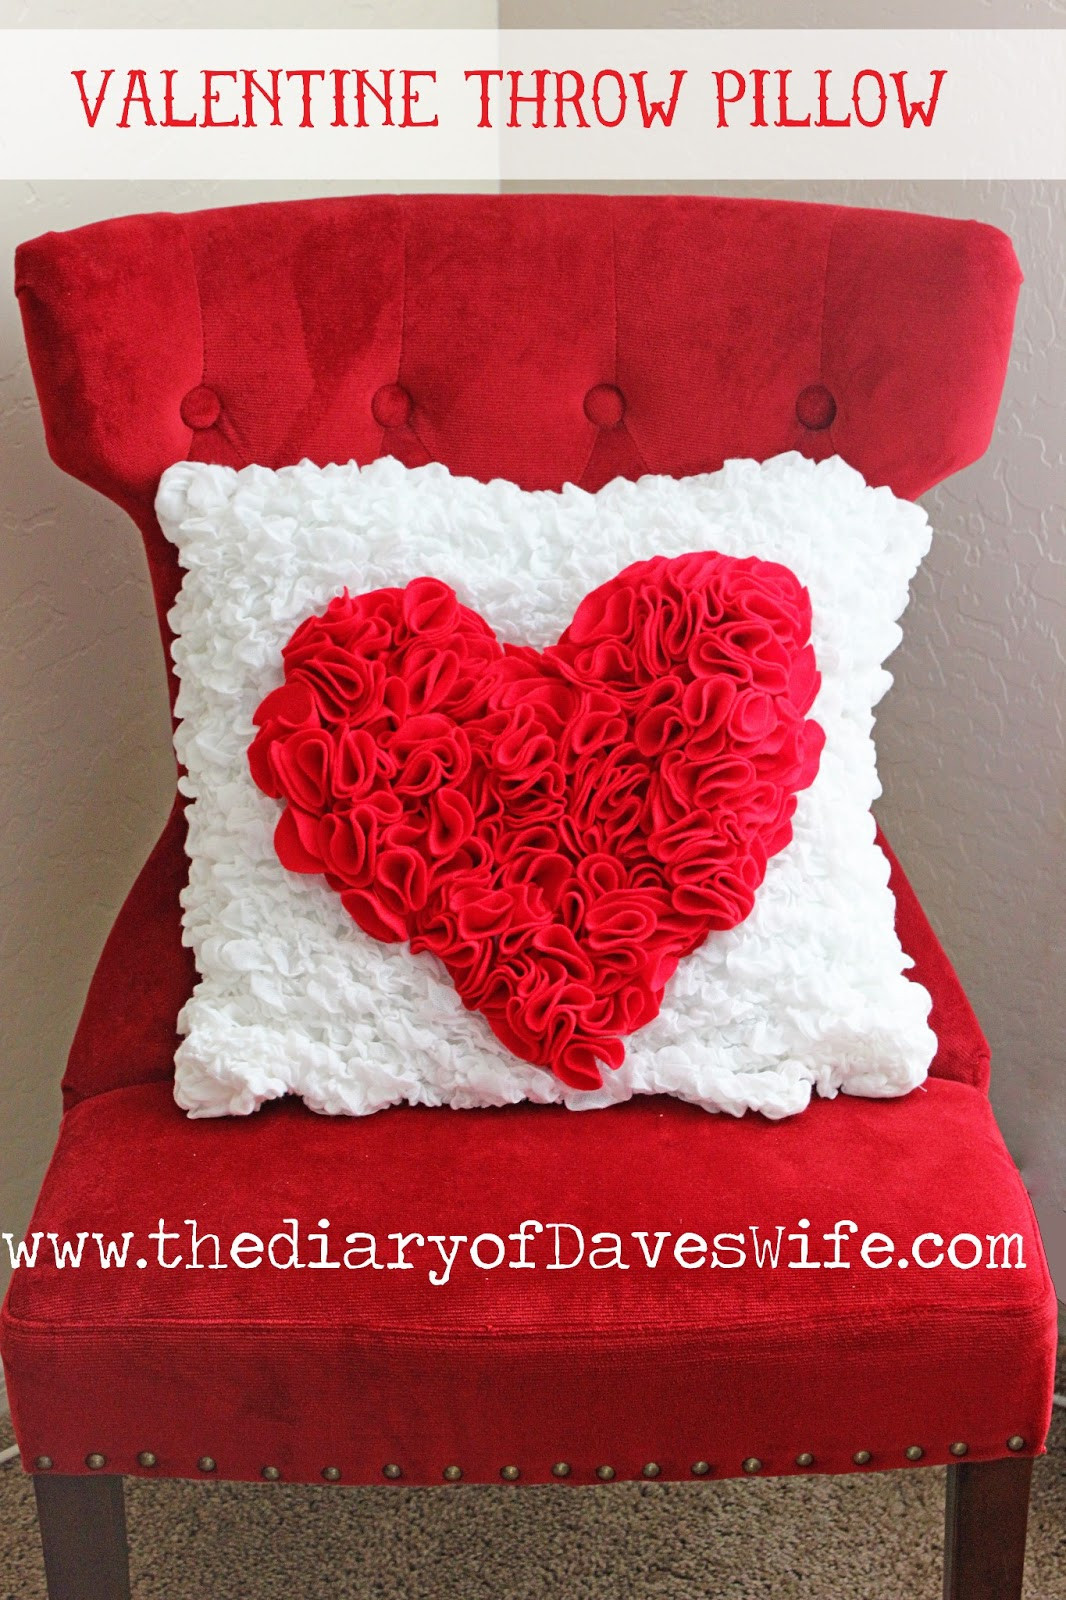 Best ideas about DIY Valentine Crafts
. Save or Pin 30 DIY Valentine Crafts and Projects The 36th AVENUE Now.